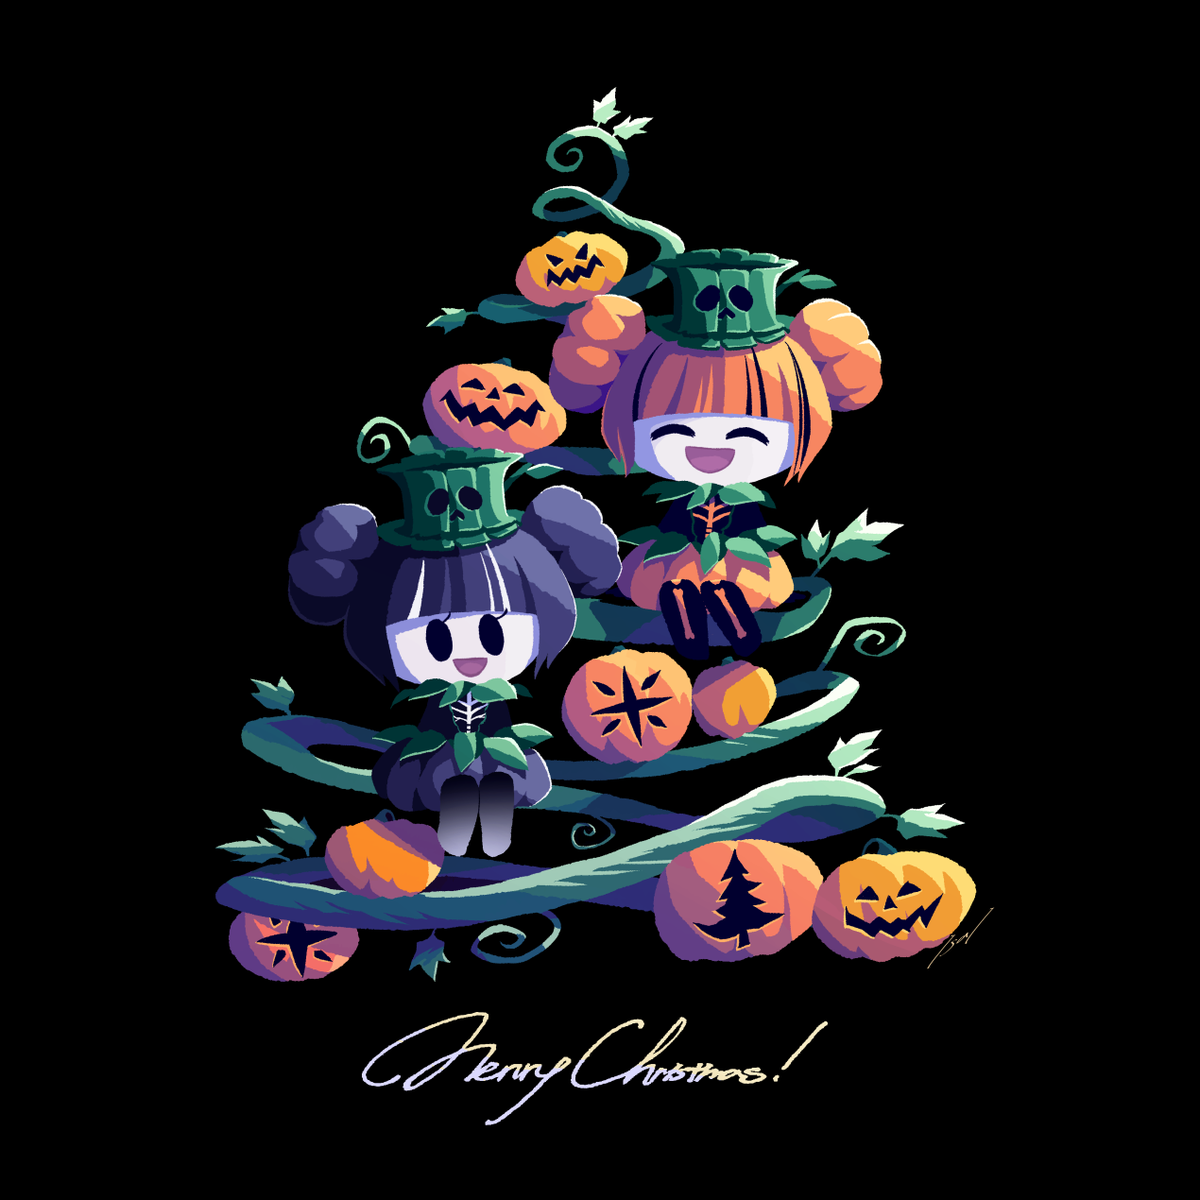 「Spooky Christmas! 」|ｉｓａｉのイラスト